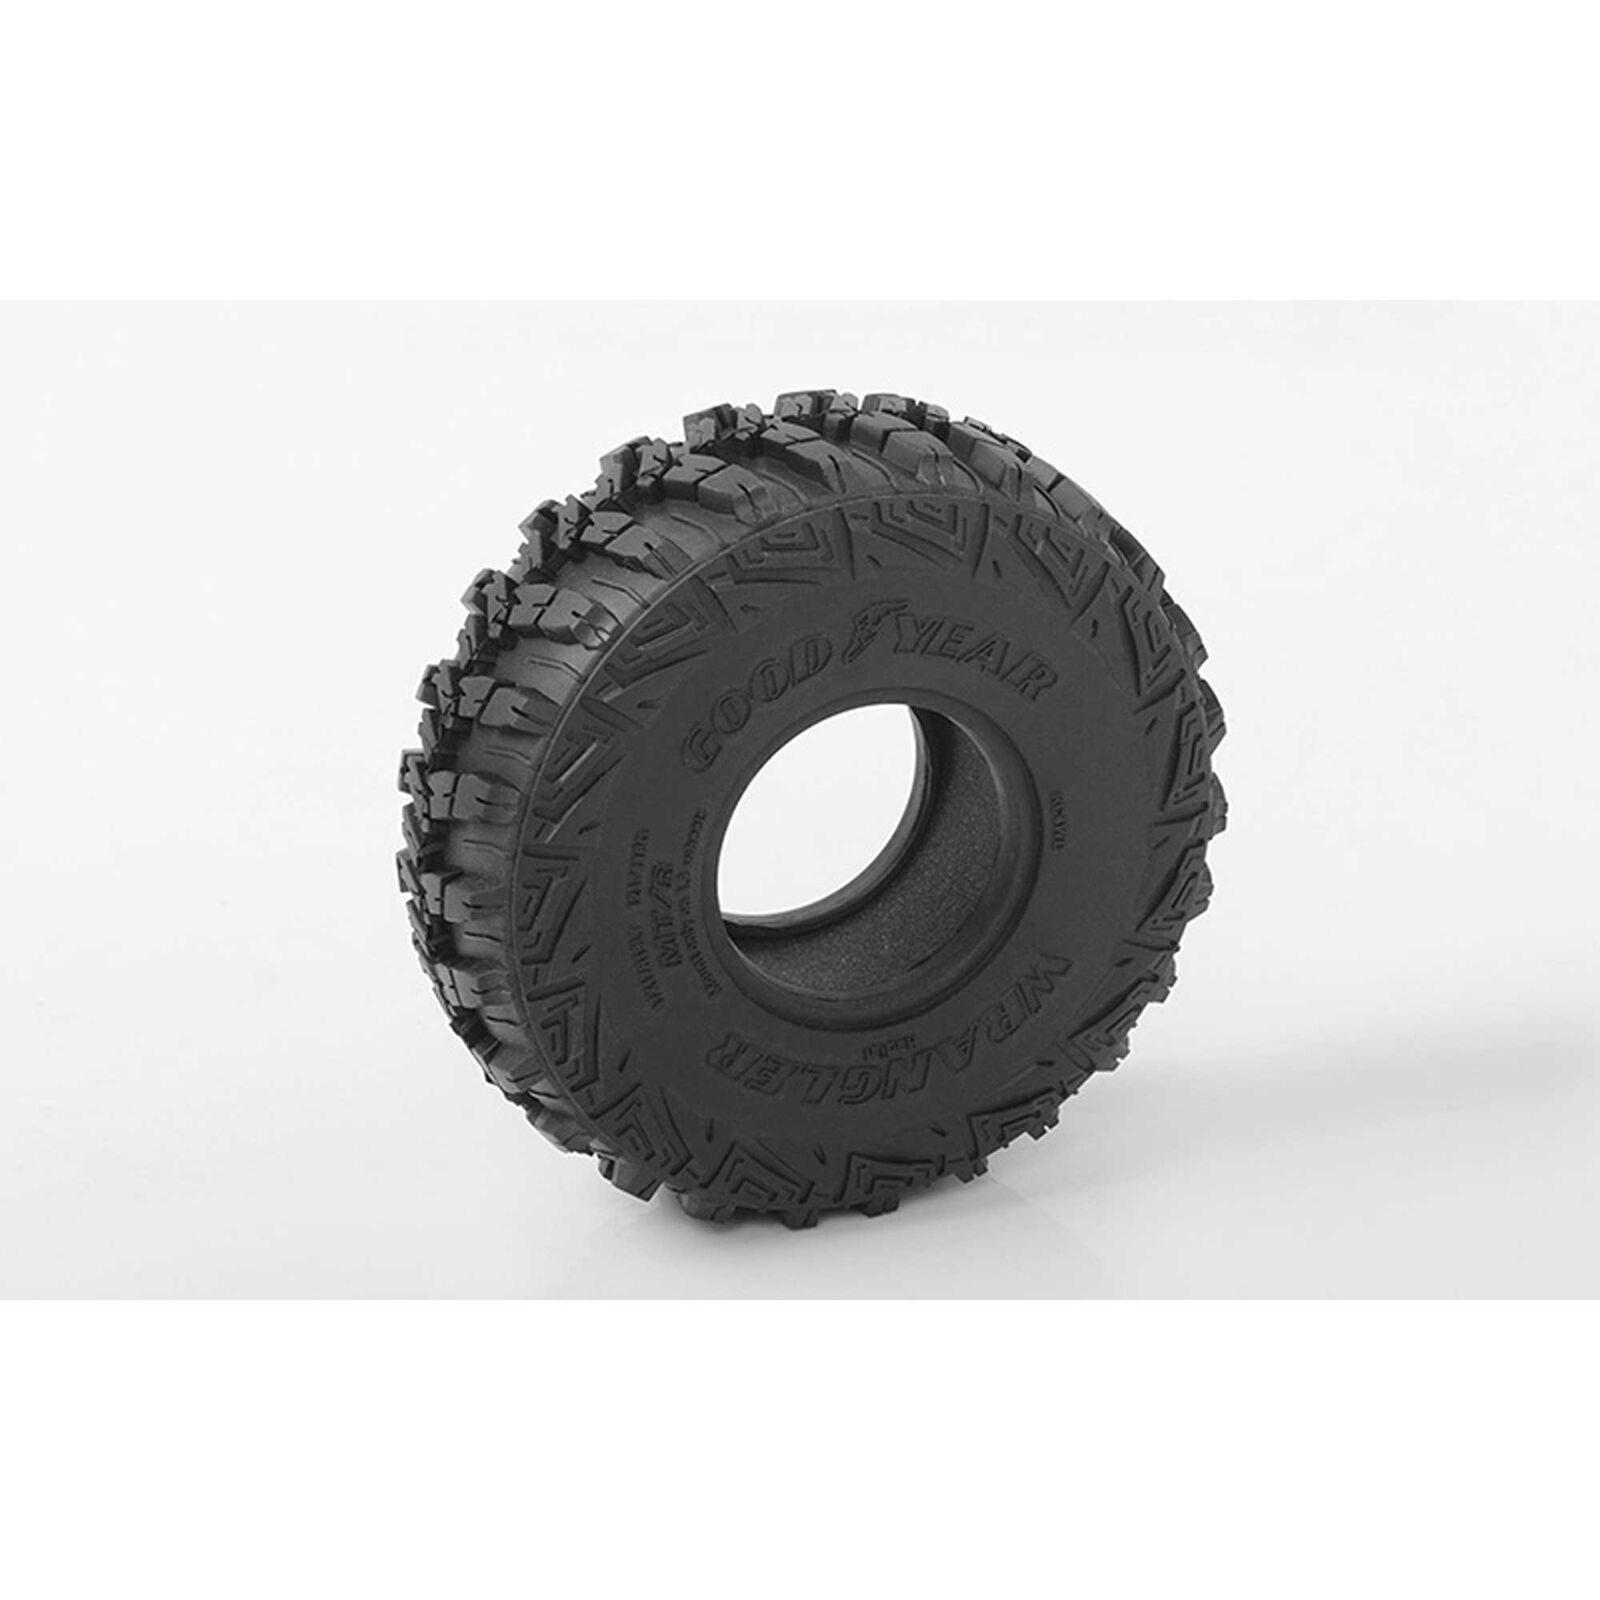 Goodyear Wrangler MT/R 1.9, 4.75 Scale Tires (2)